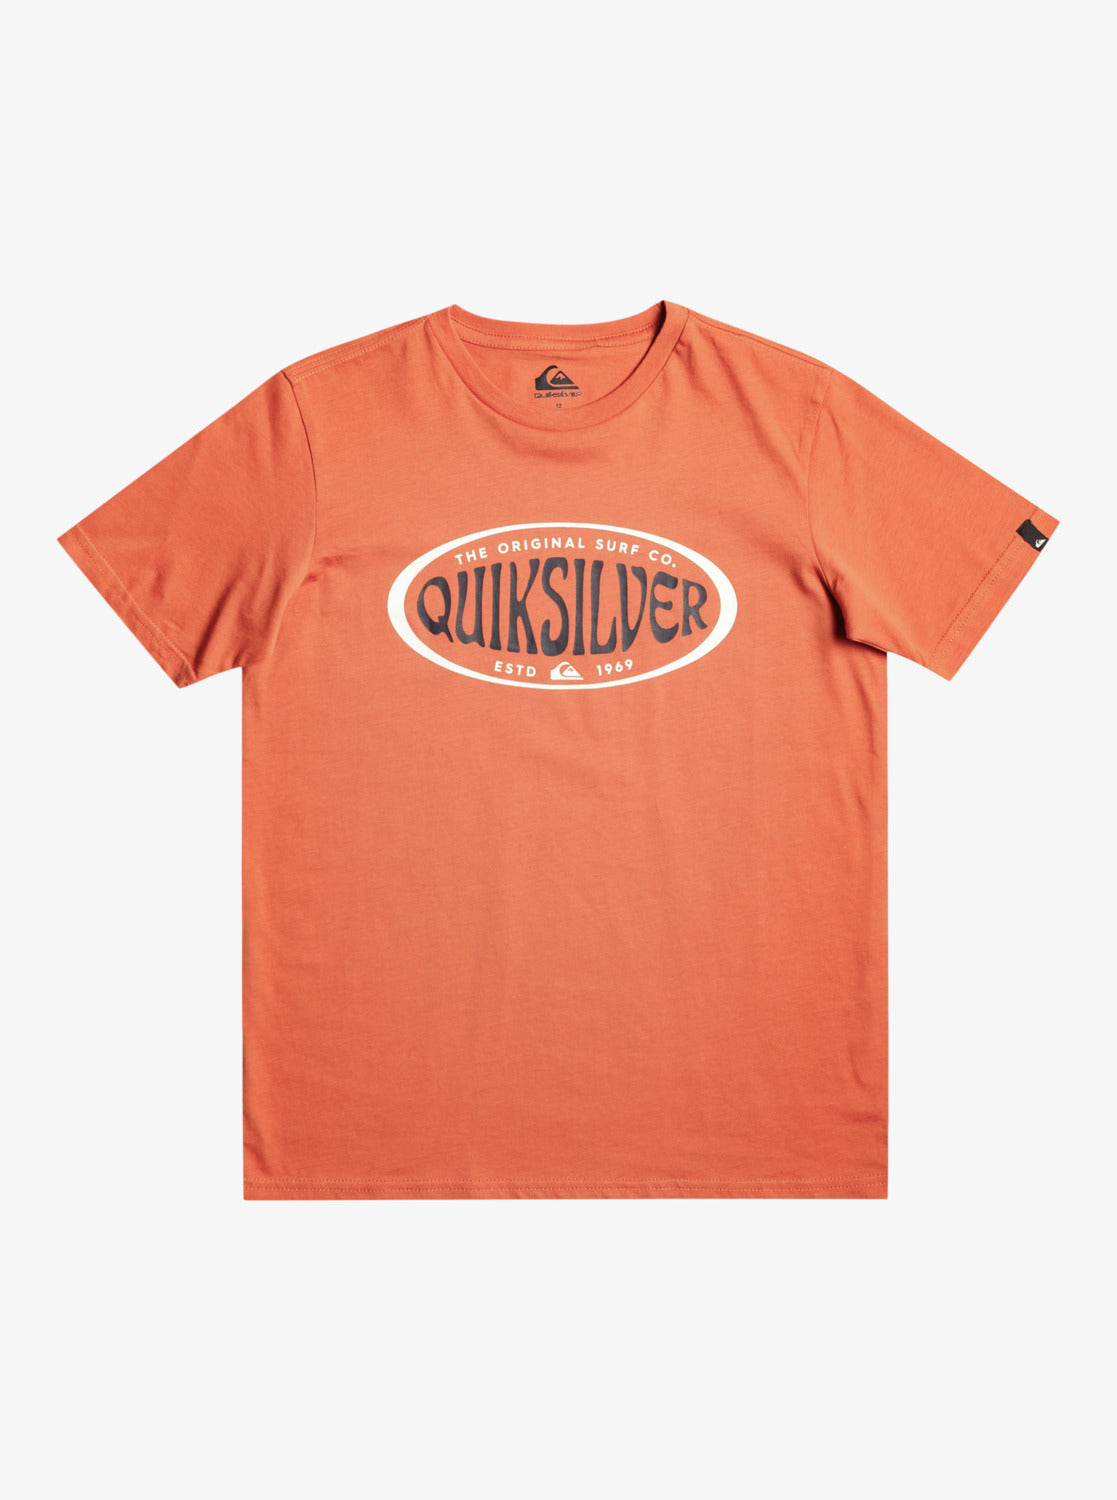 Quiksilver In Circles T-Shirt in Mecca Orange